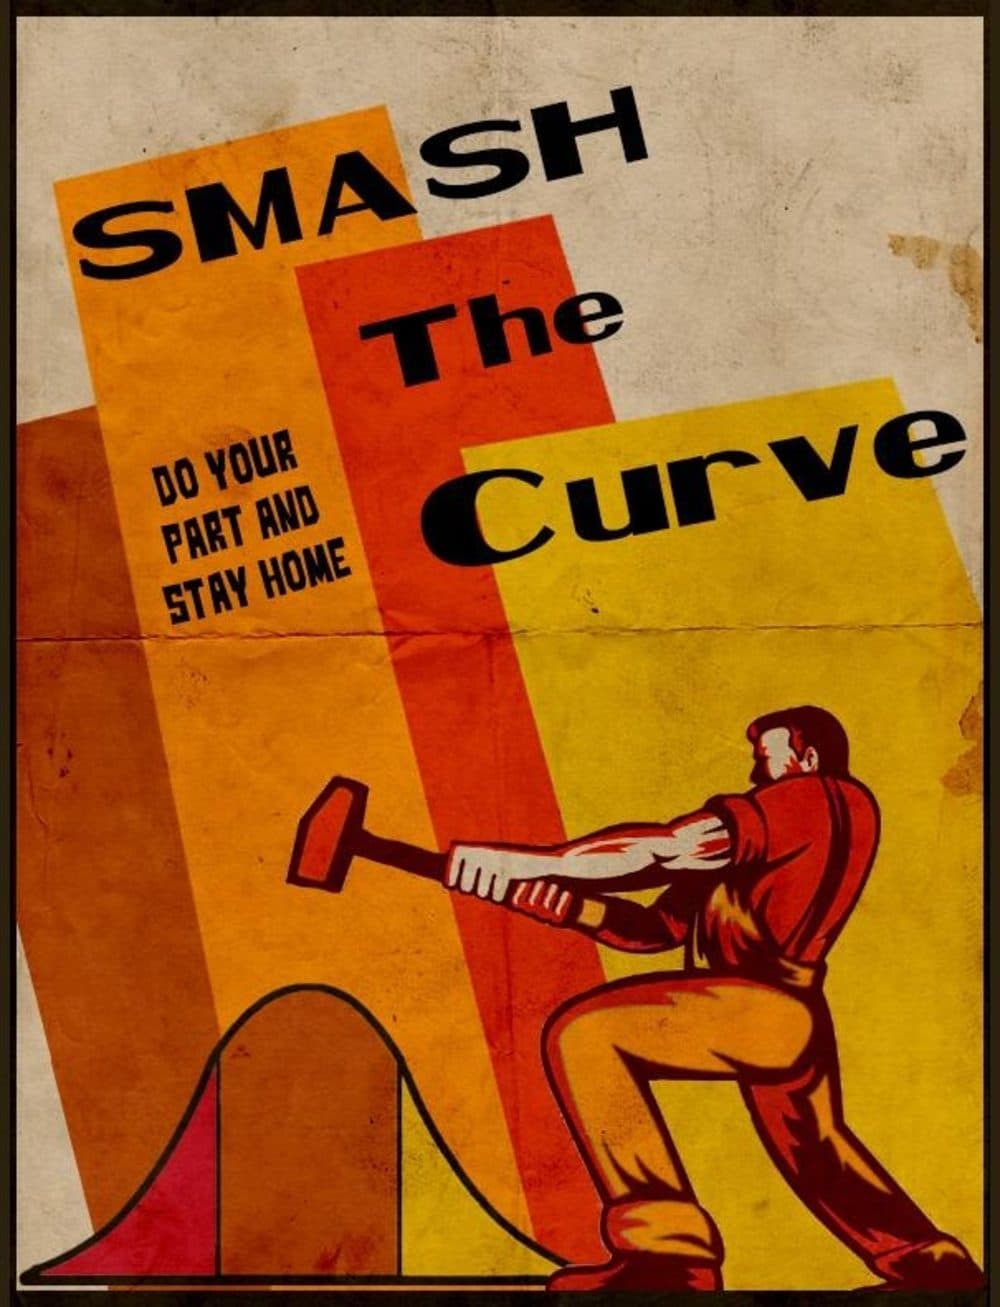 &quot;Smash The Curve&quot; by u/Gleeemonex